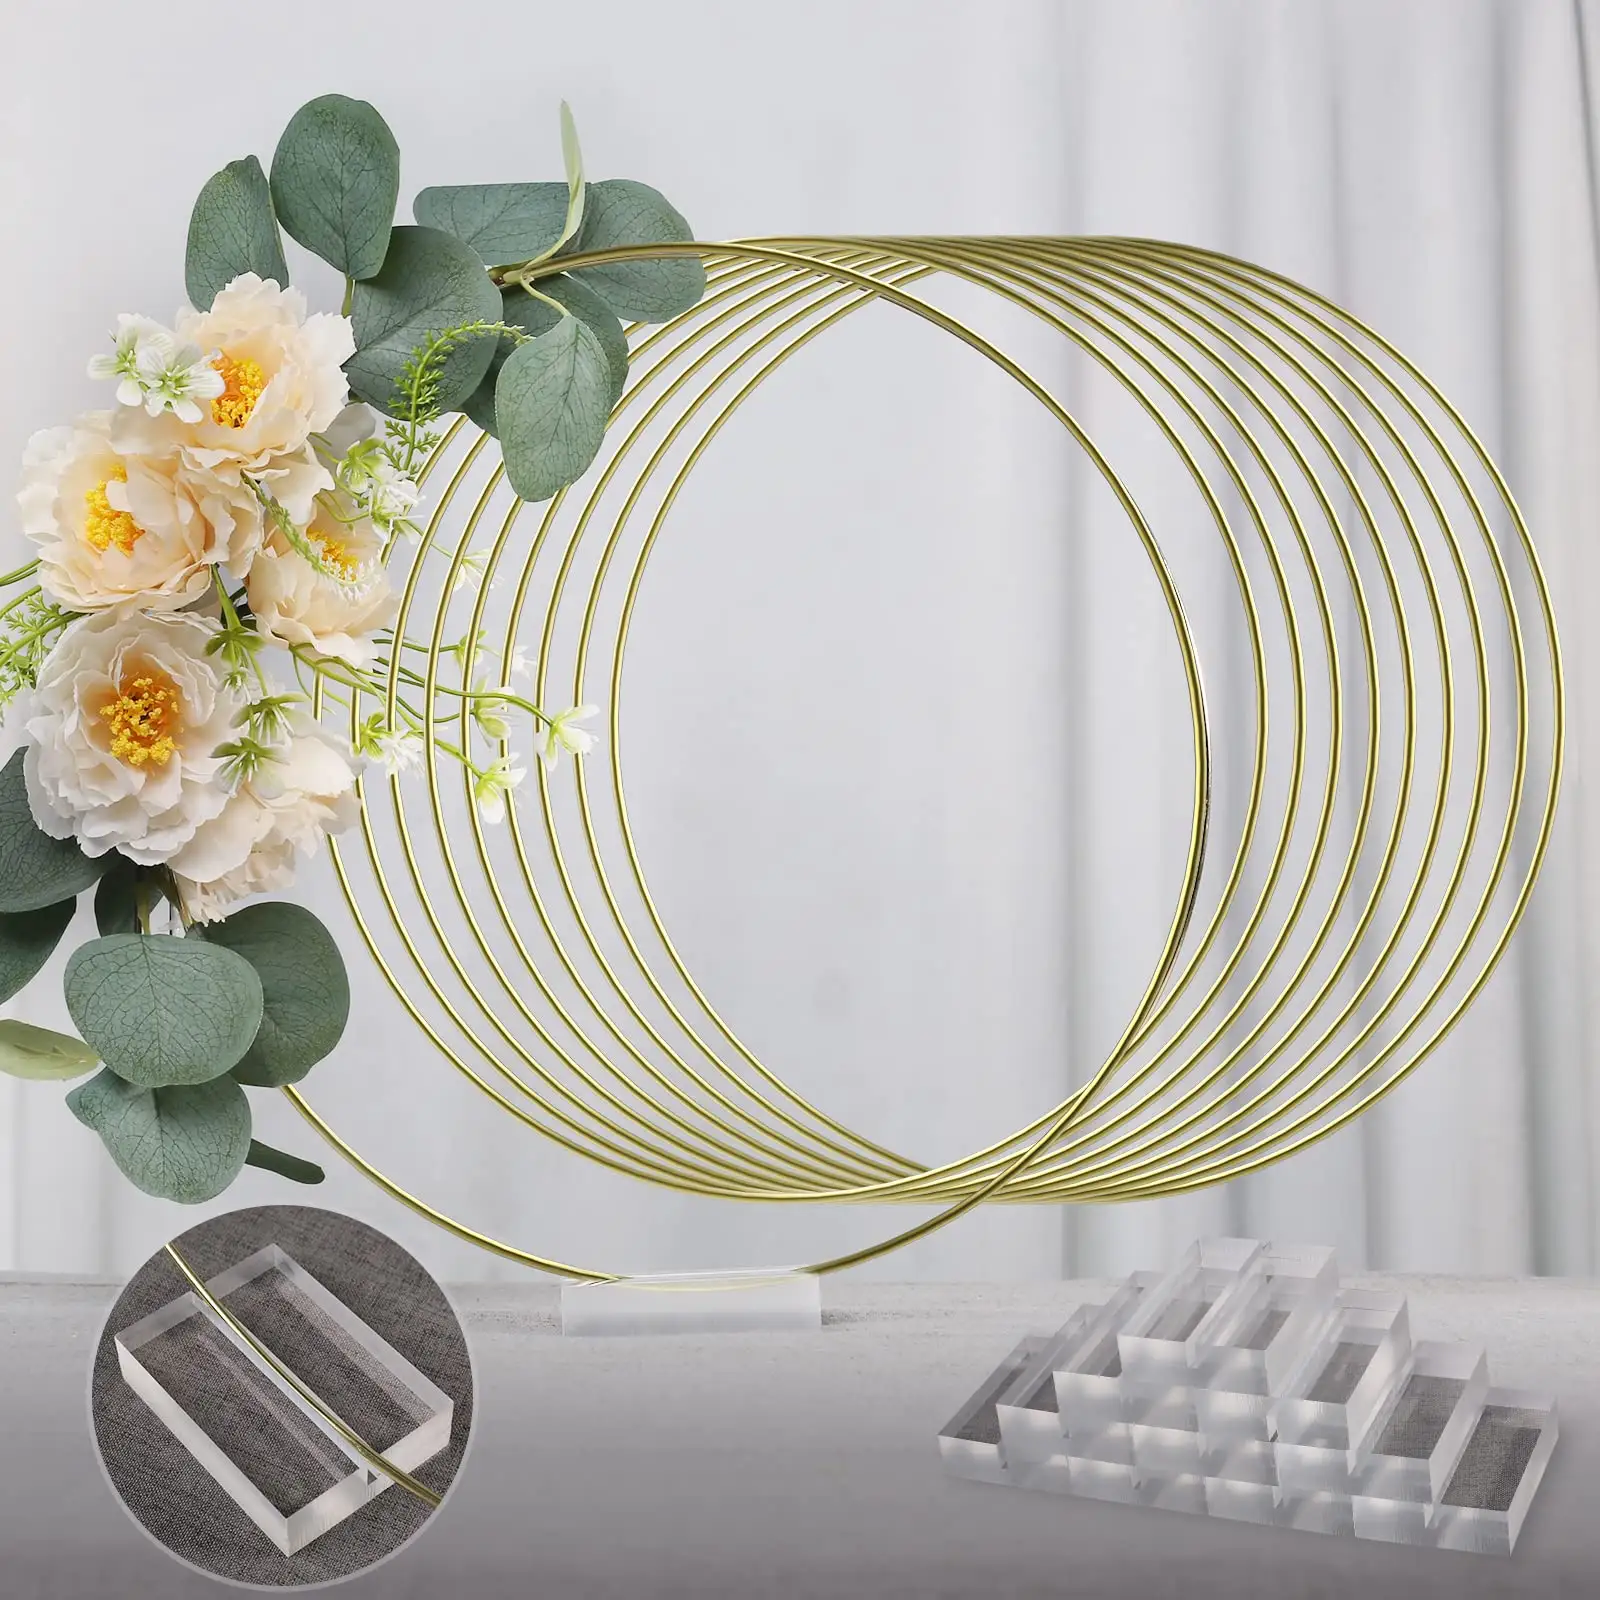 Ornamen kerajinan karangan bunga dekorasi meja pernikahan DIY dasar akrilik cincin besi emas karangan bunga logam Amazon